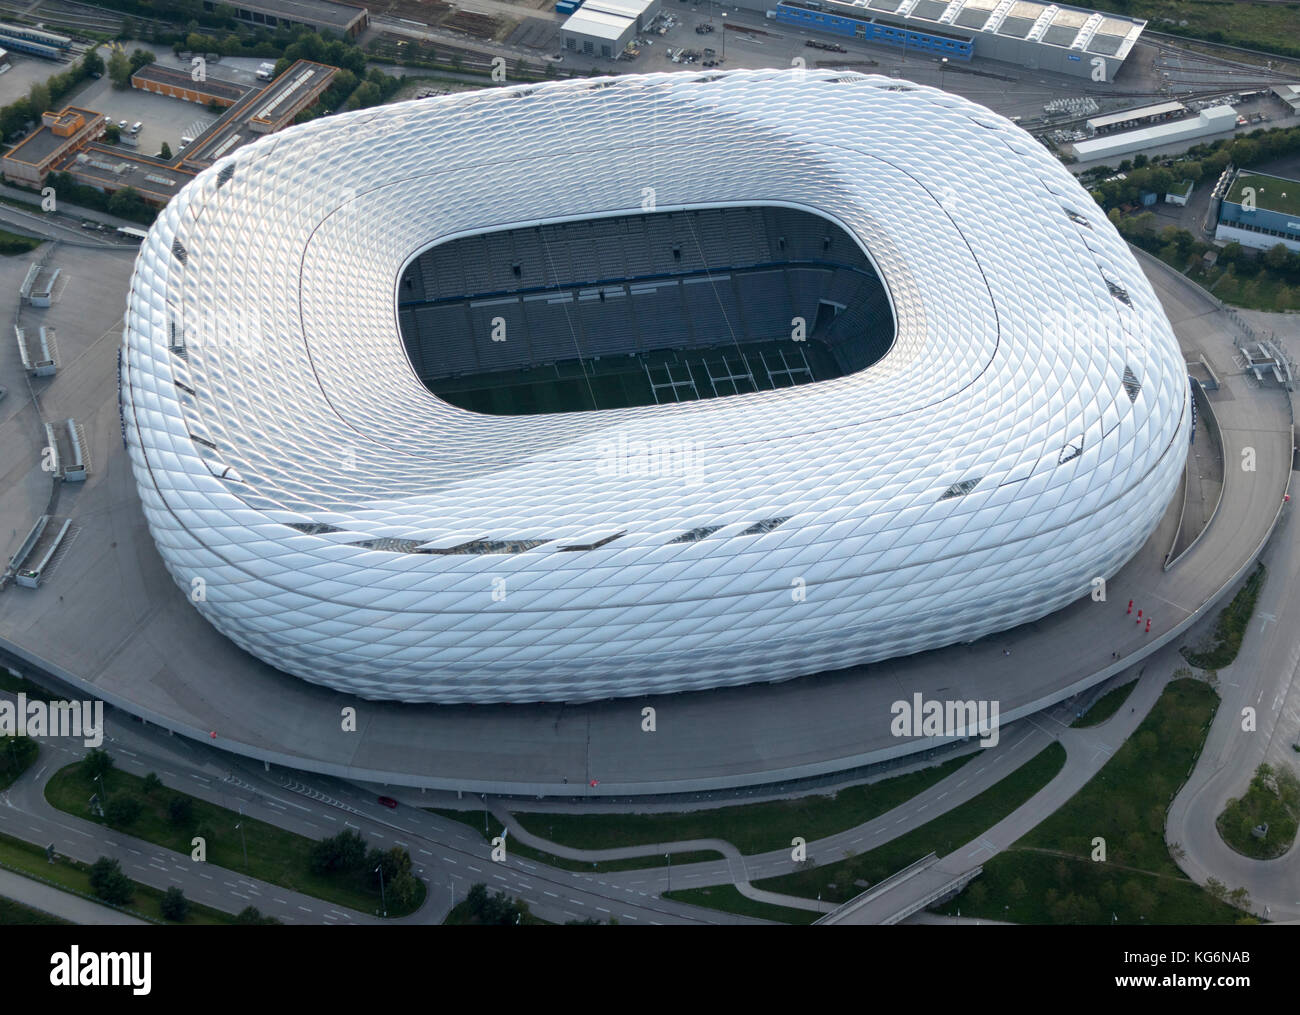 Aerial View Of Allianz Arena Football Stadium Munich Bavaria Germany Stock Photo Alamy